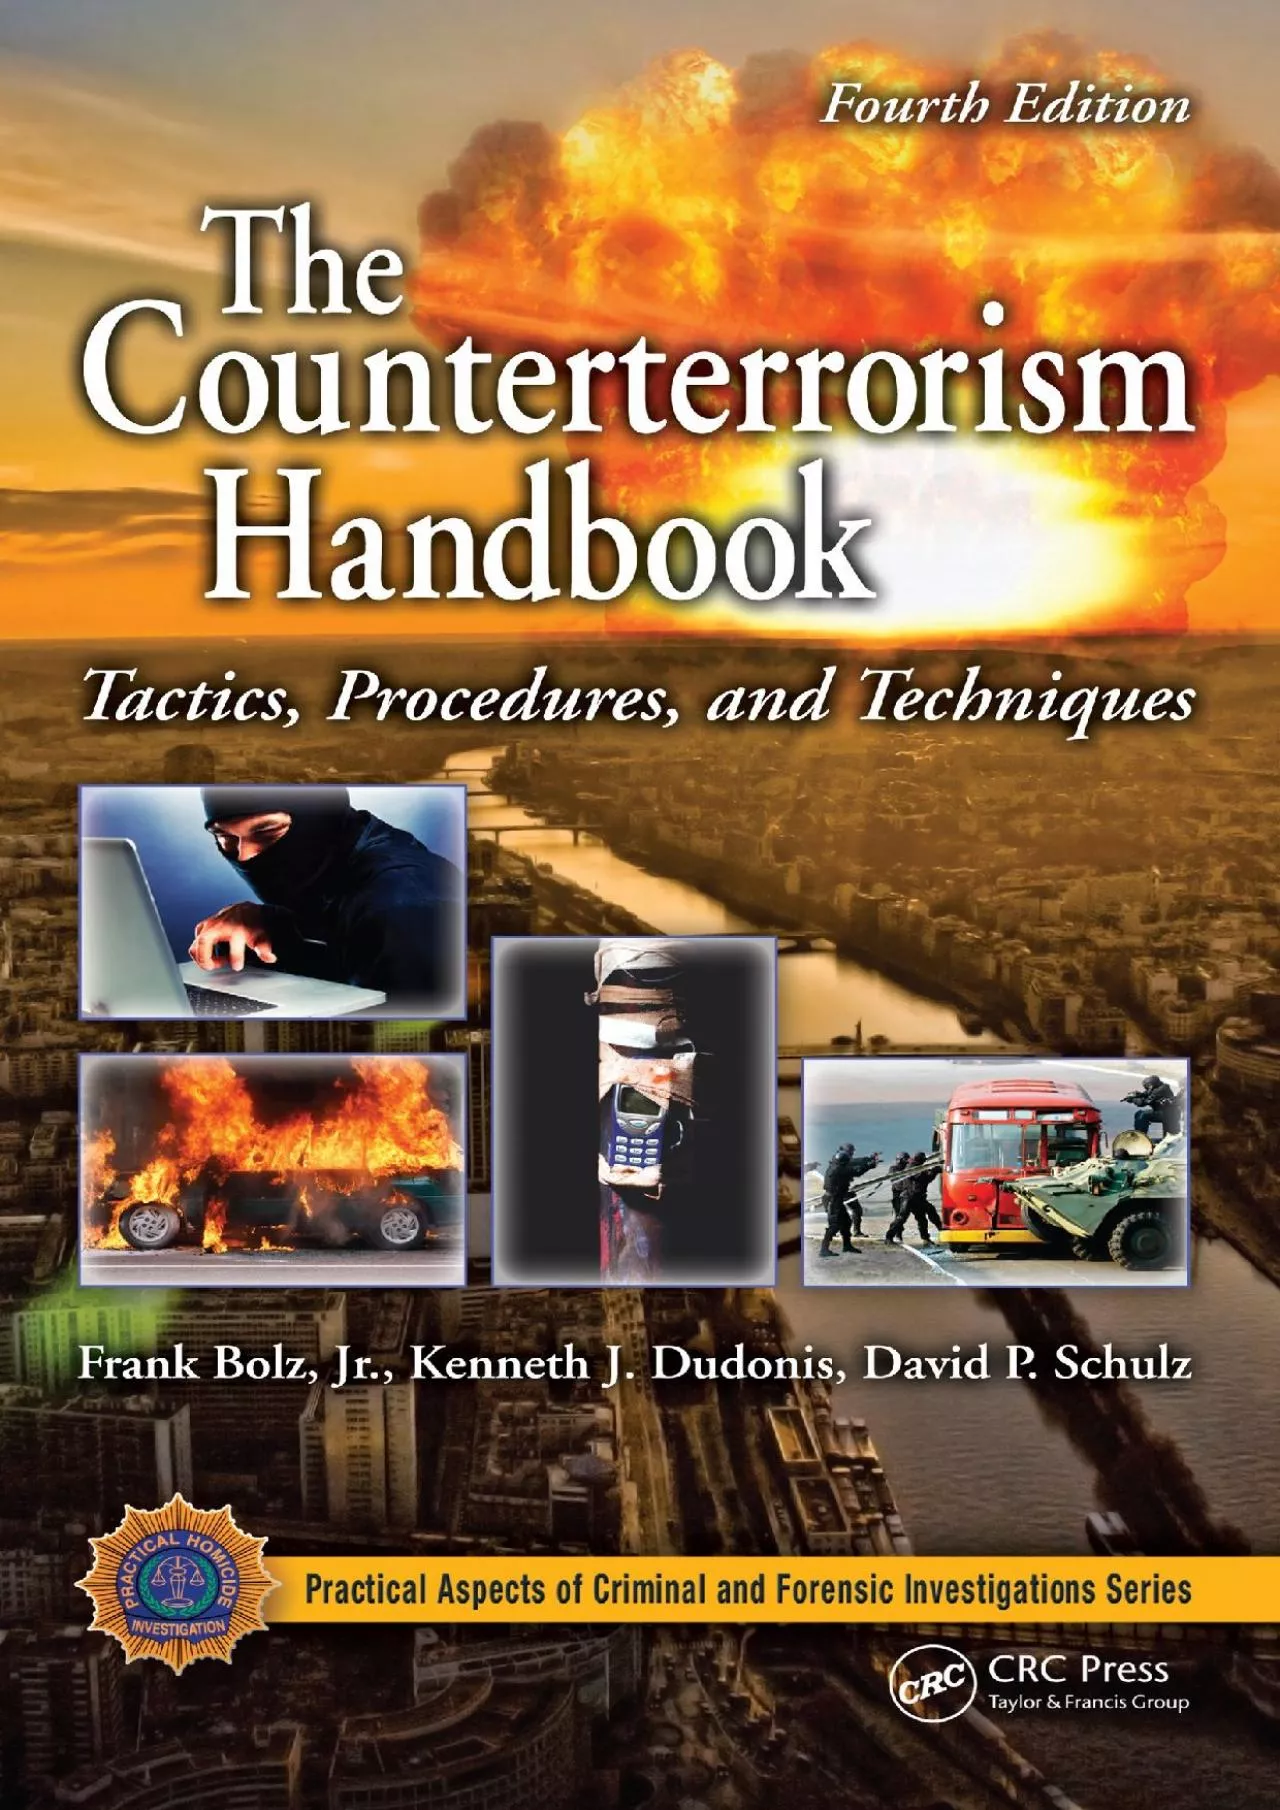 $PDF$/READ/DOWNLOAD The Counterterrorism Handbook: Tactics, Procedures, and Techniques,